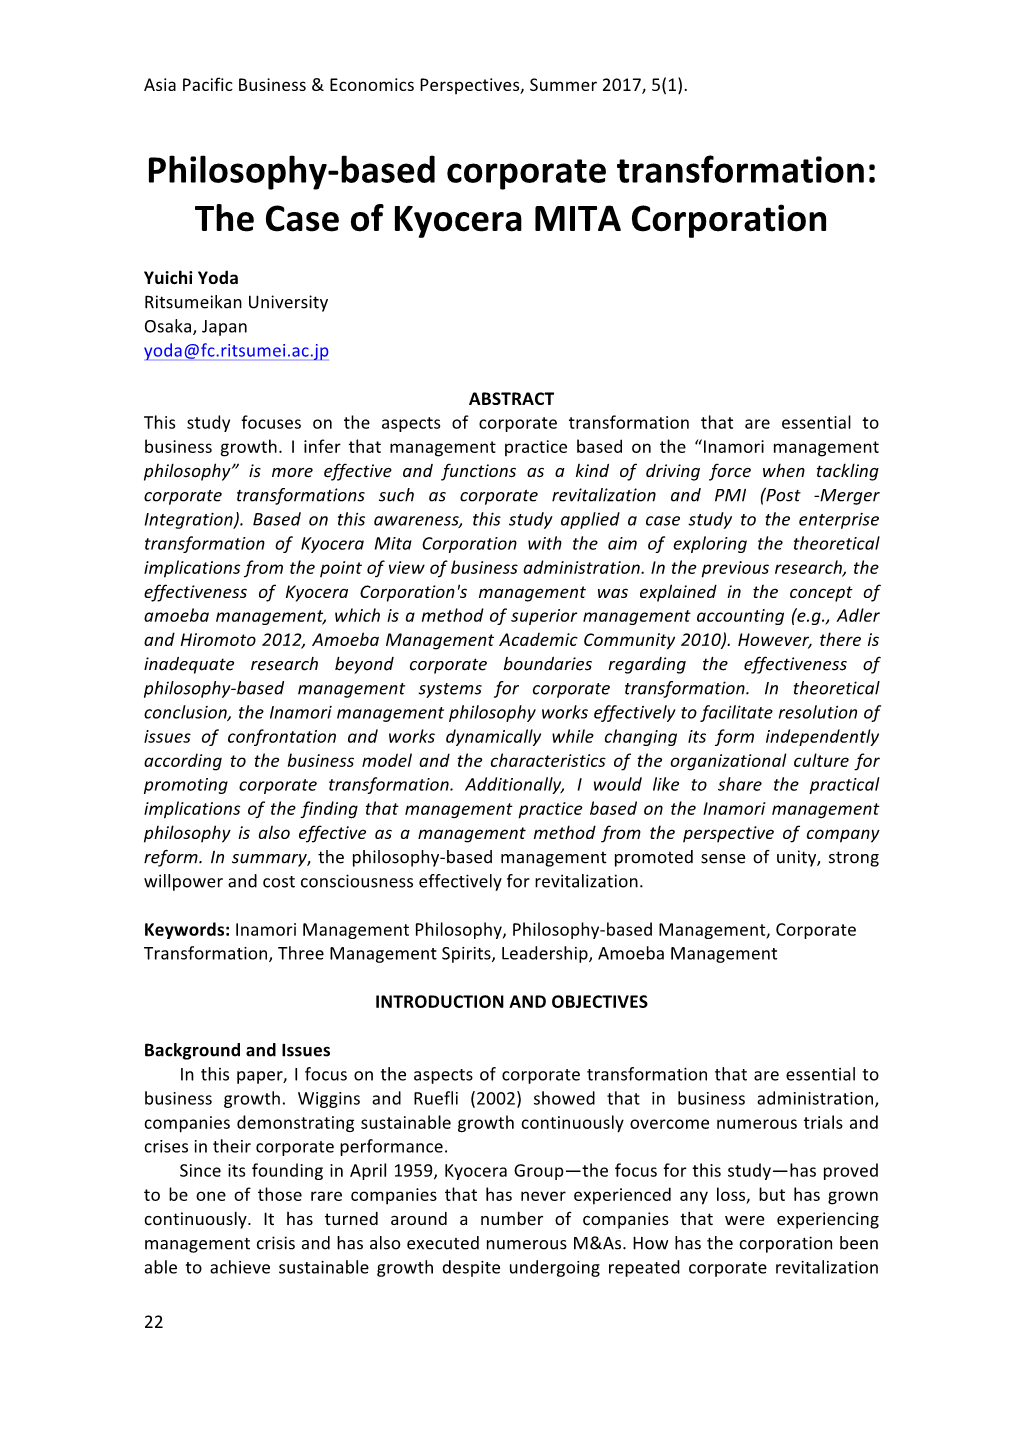 The Case of Kyocera MITA Corporation